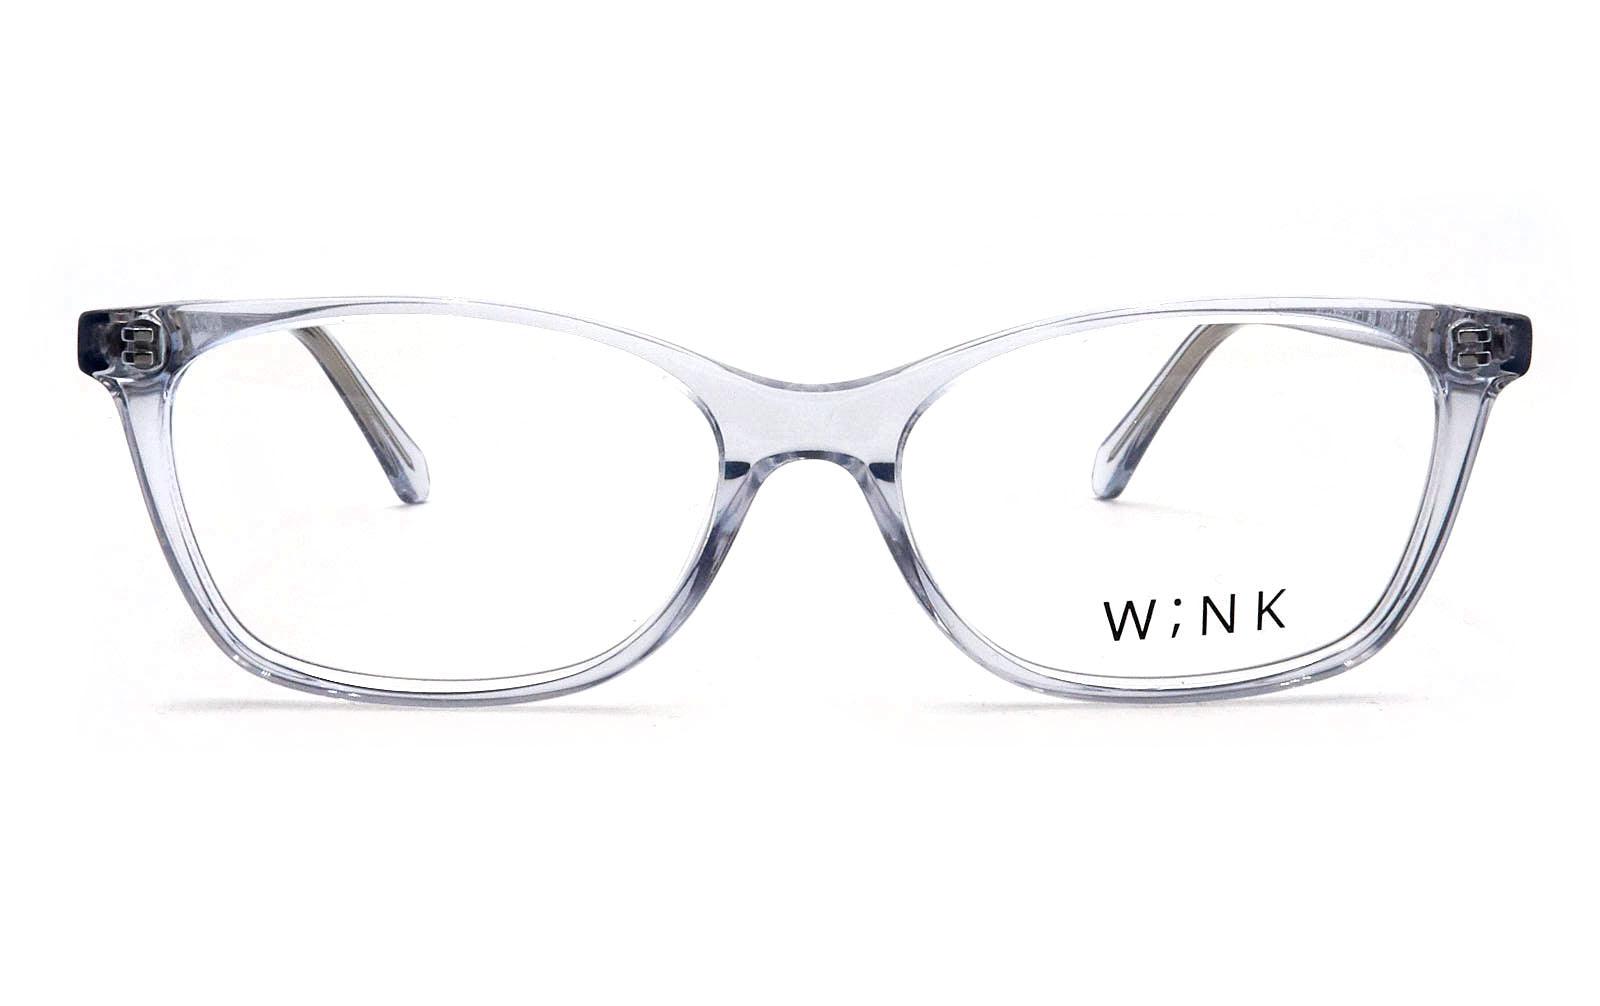 wink austin 05 - Opticas Lookout